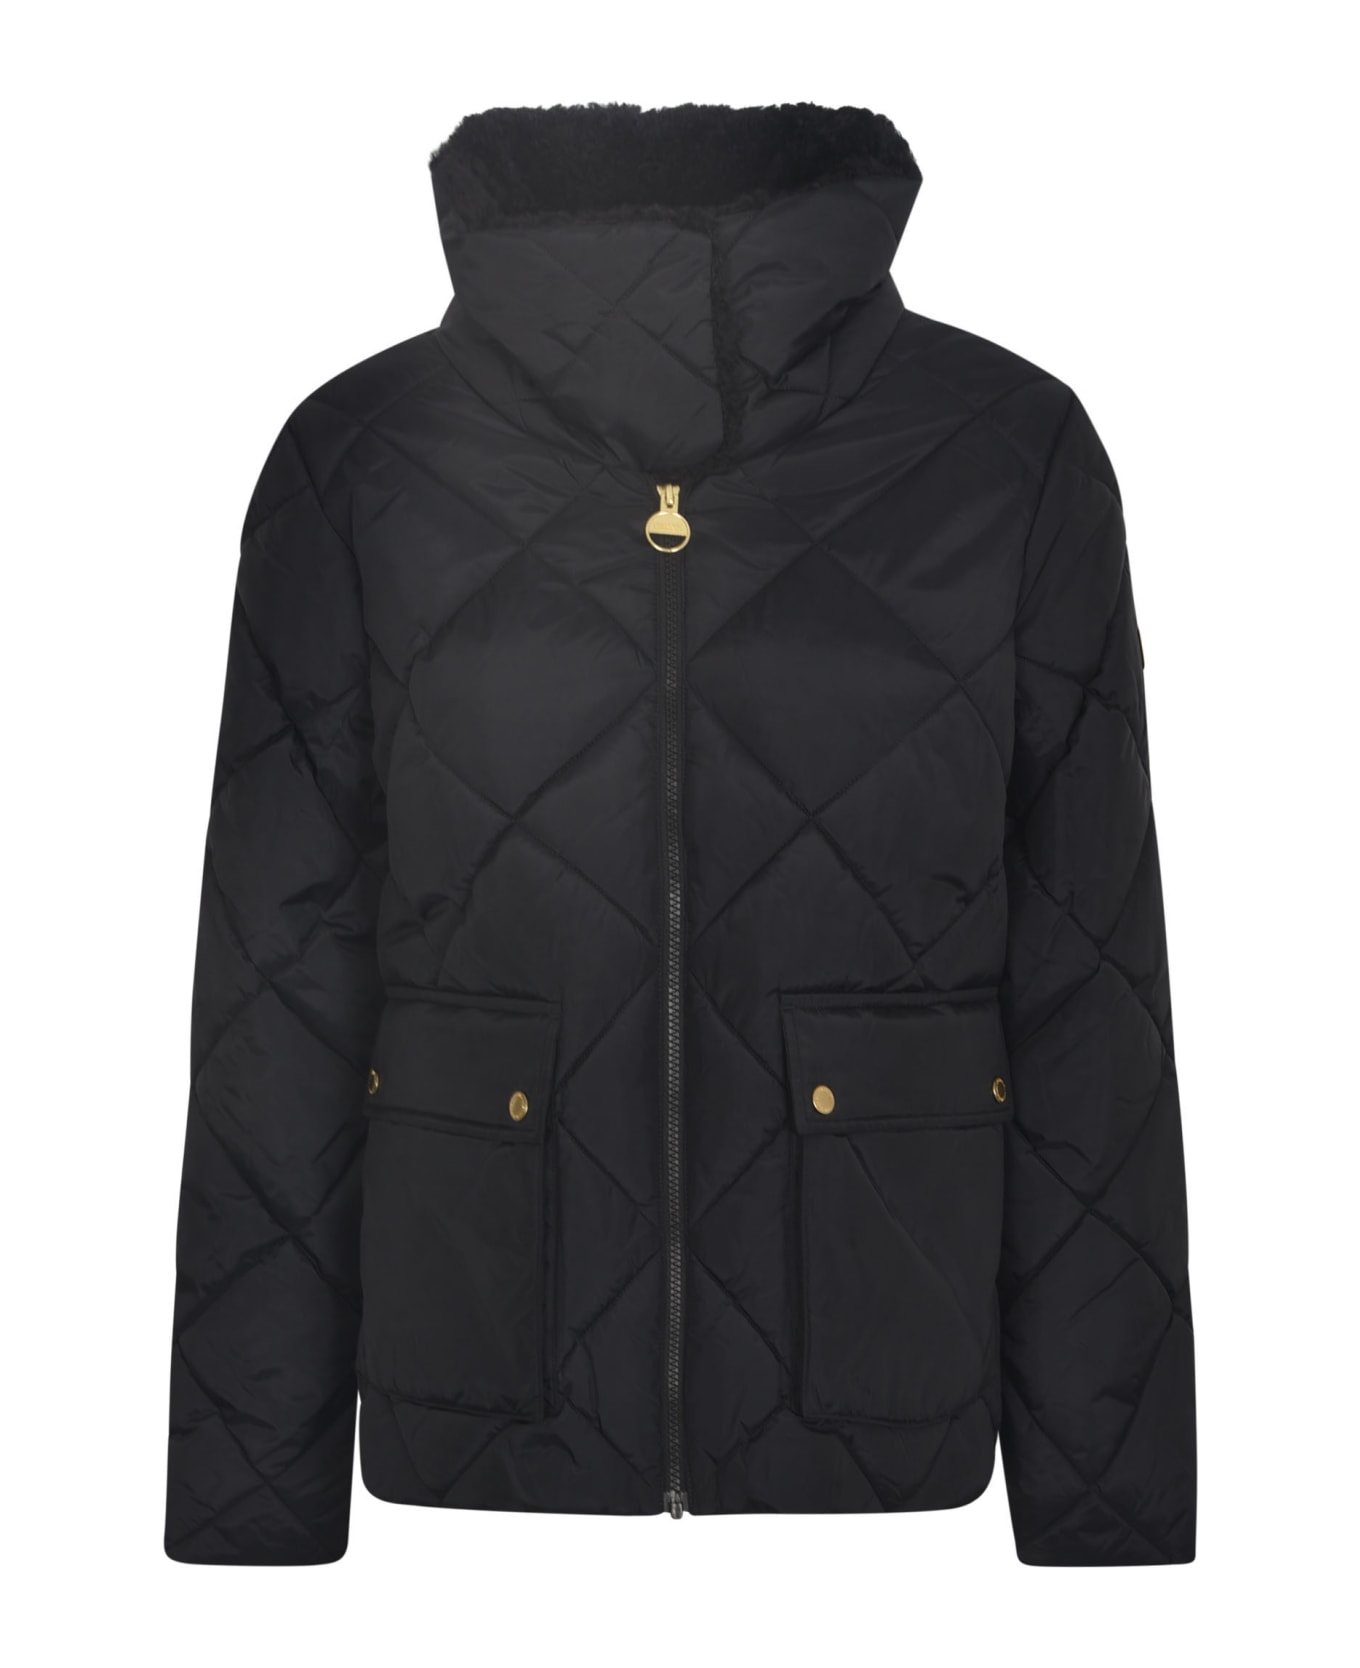 Barbour Quilted Zip Classic Jacket - Black